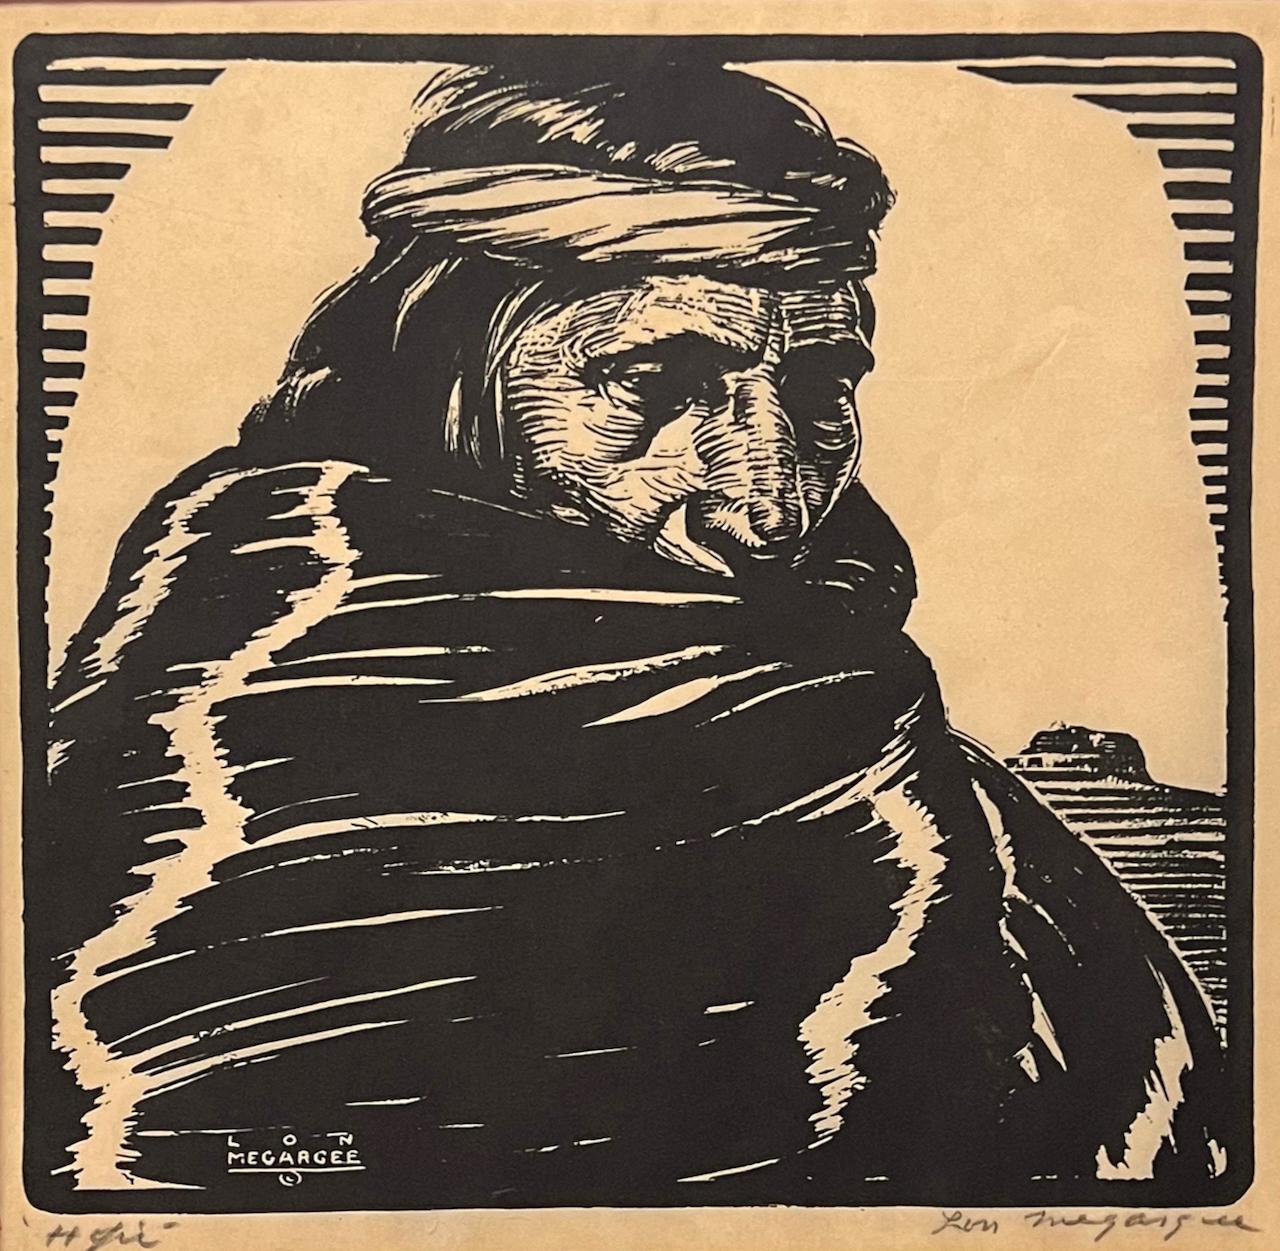 Title: Hopi ca. 1920s
Artist: Lon Megargee
Medium: Block Print
Size: 11 x 11 inches (Sight Measurement)

Creator of Stetson's hat logo 